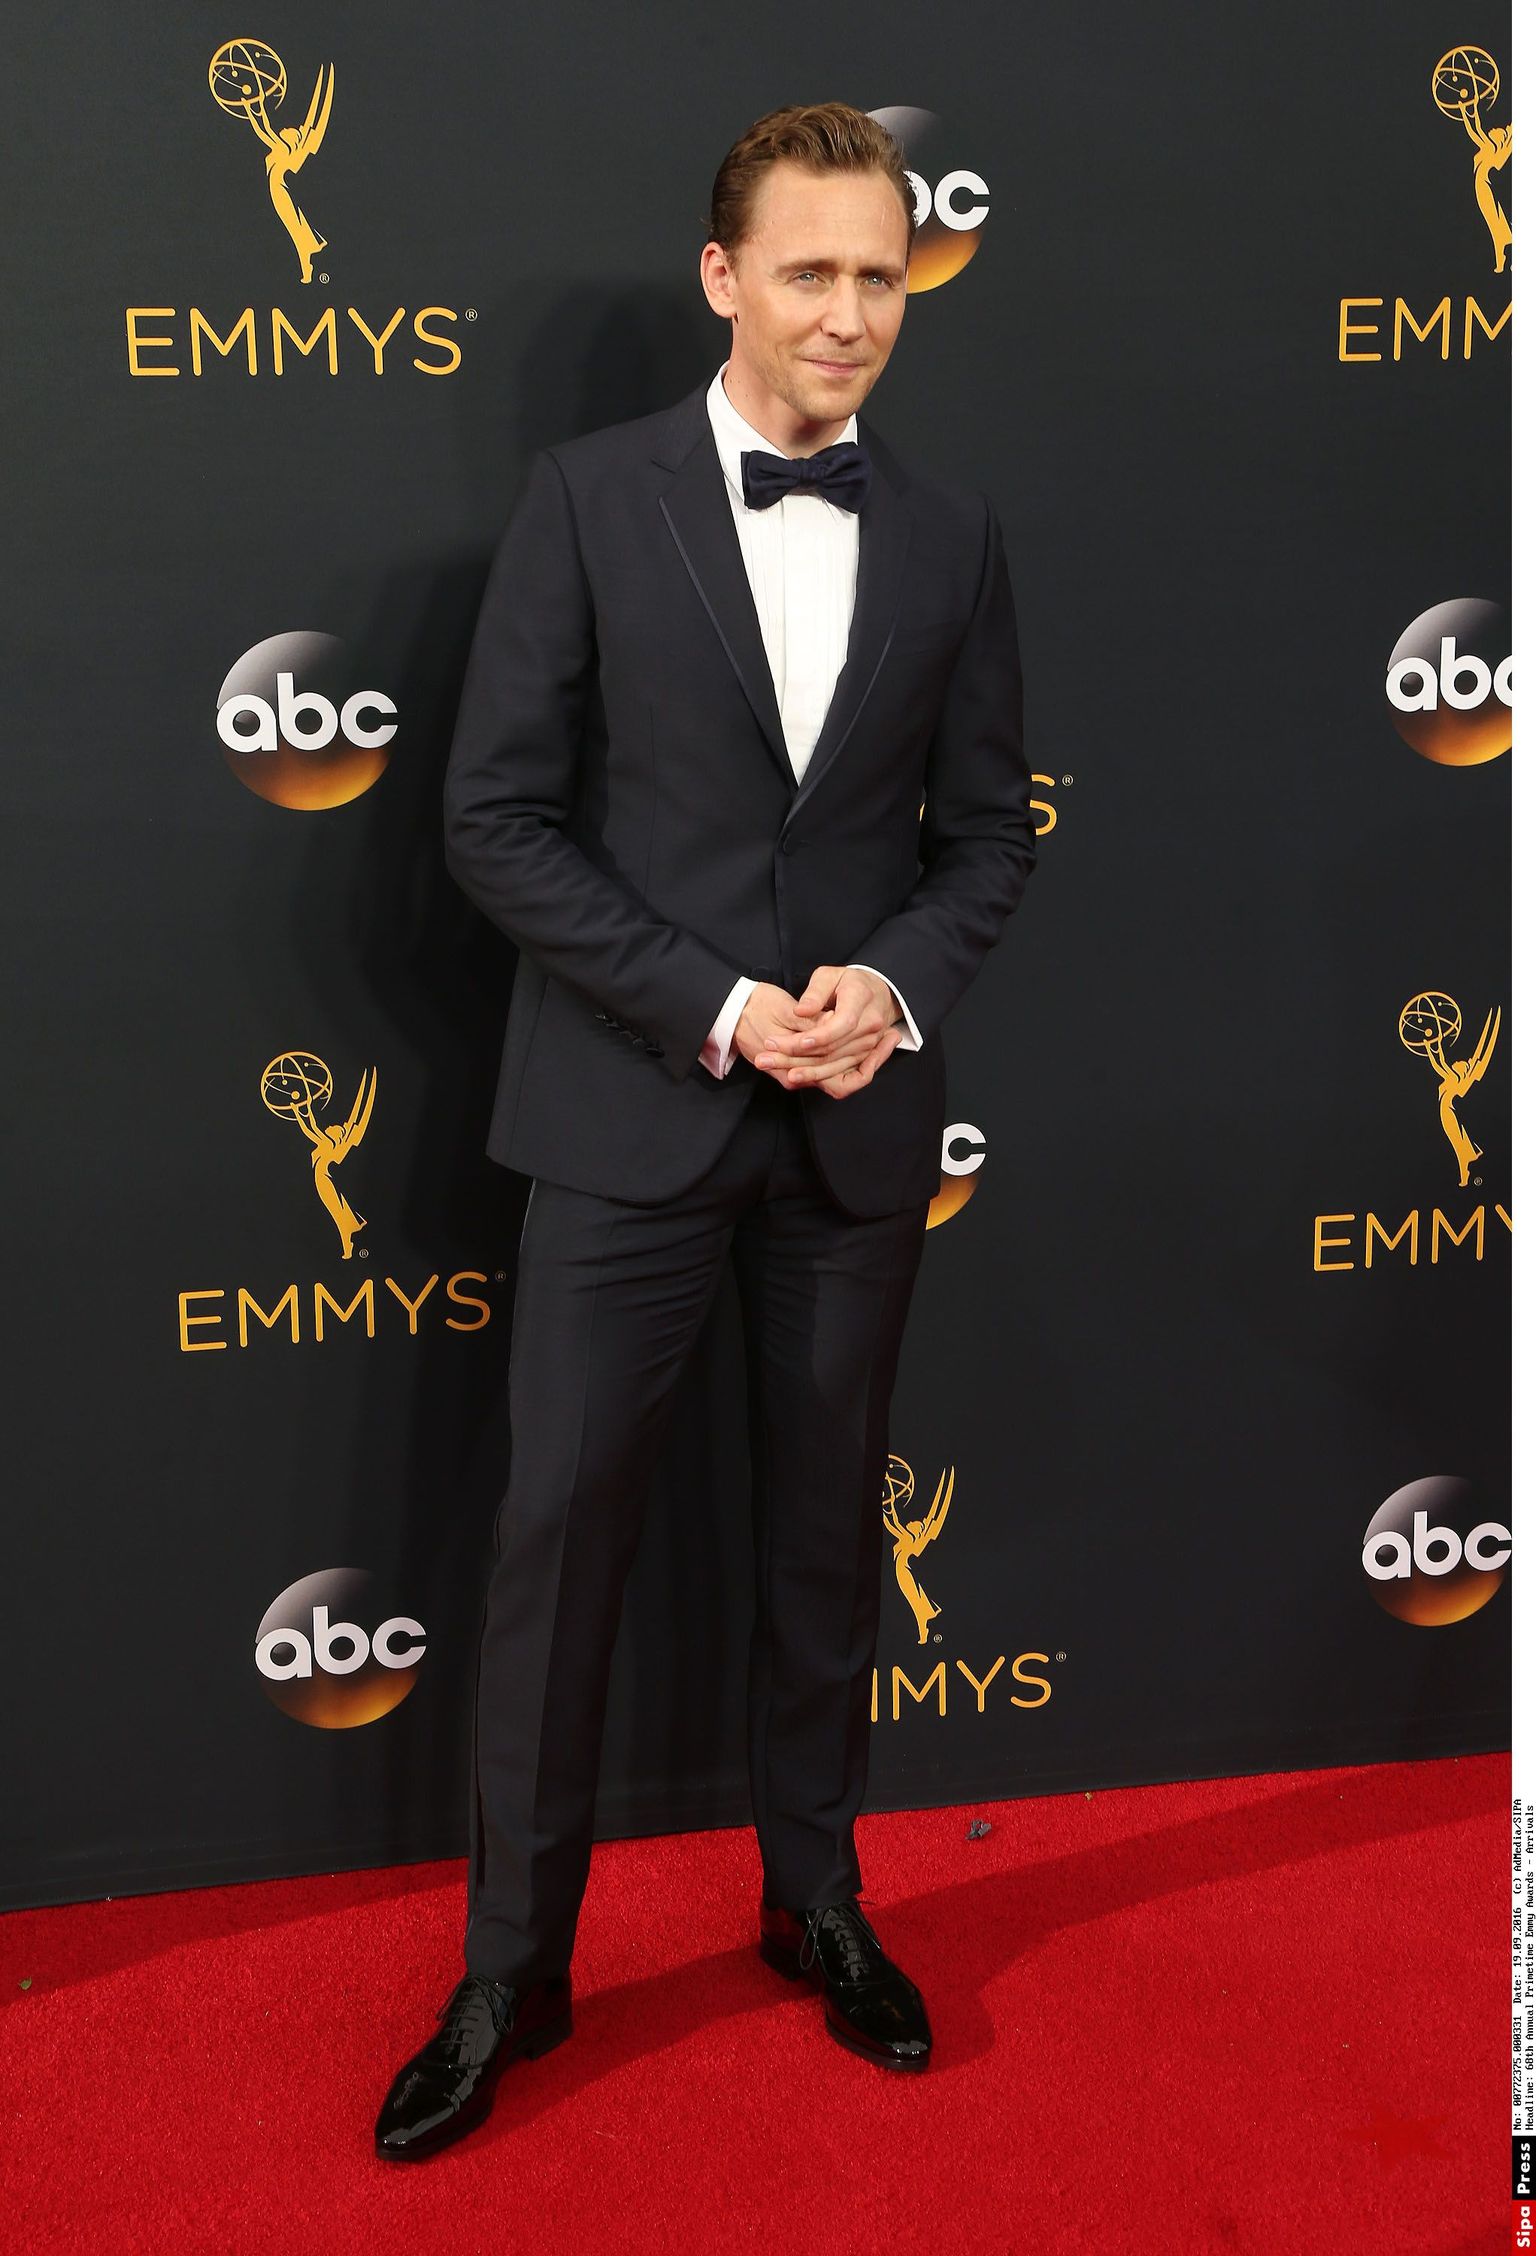 18 September 2016 - Los Angeles, California - Tom Hiddleston. 68th Annual Primetime Emmy Awards held at Microsoft Theater. Photo Credit: AdMedia//ADMEDIA_adm_EmmyAwardsAR16_335/Credit:AdMedia/SIPA/1609190753